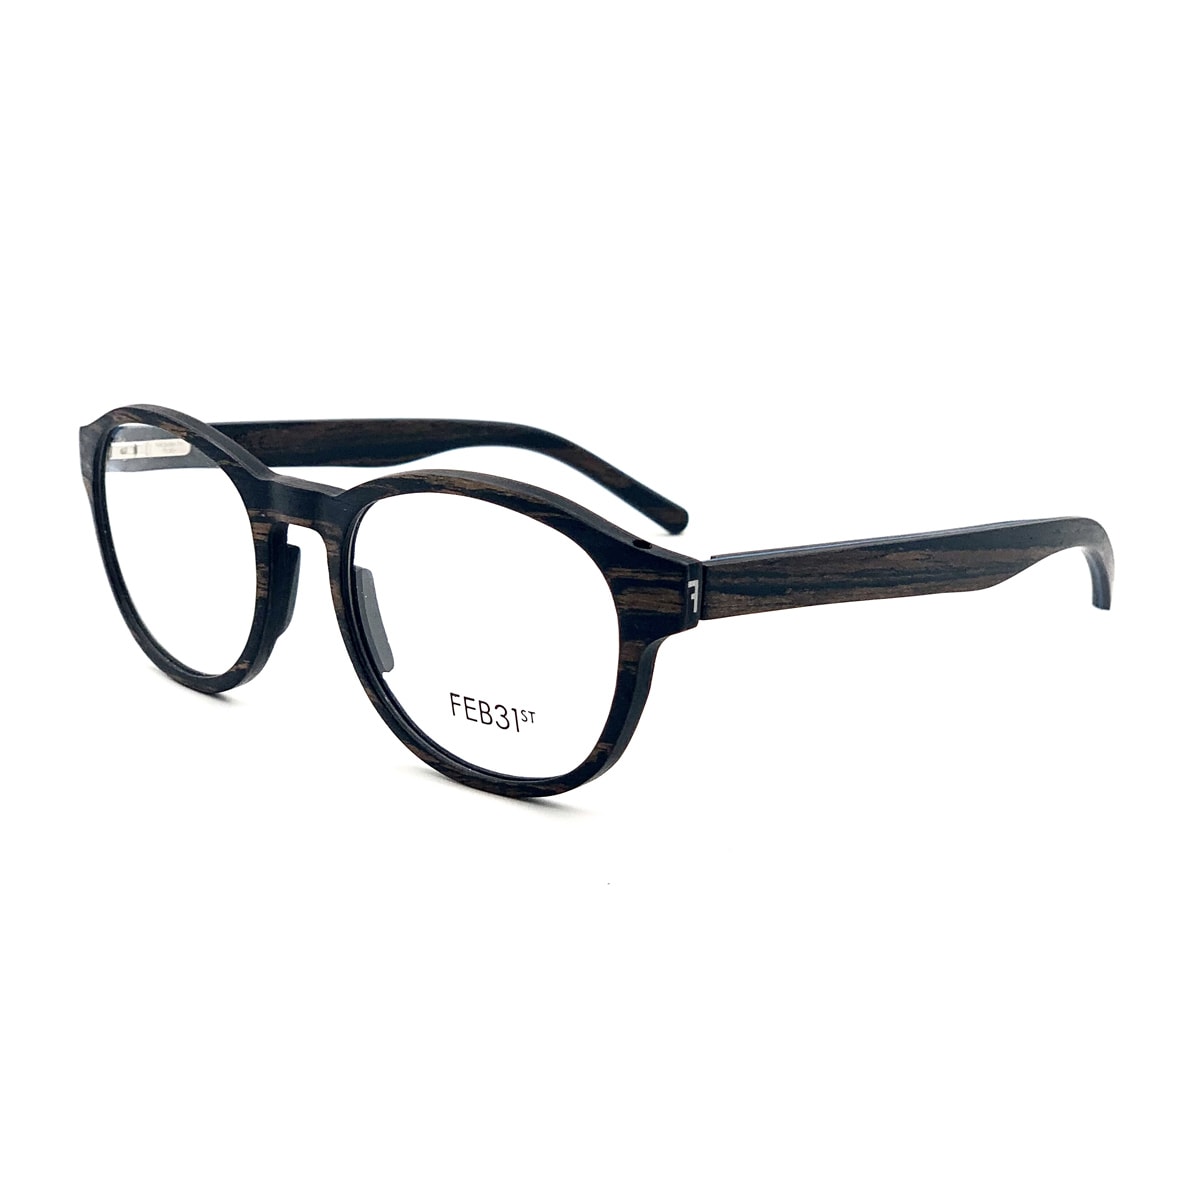 Feb31st Truman Glasses